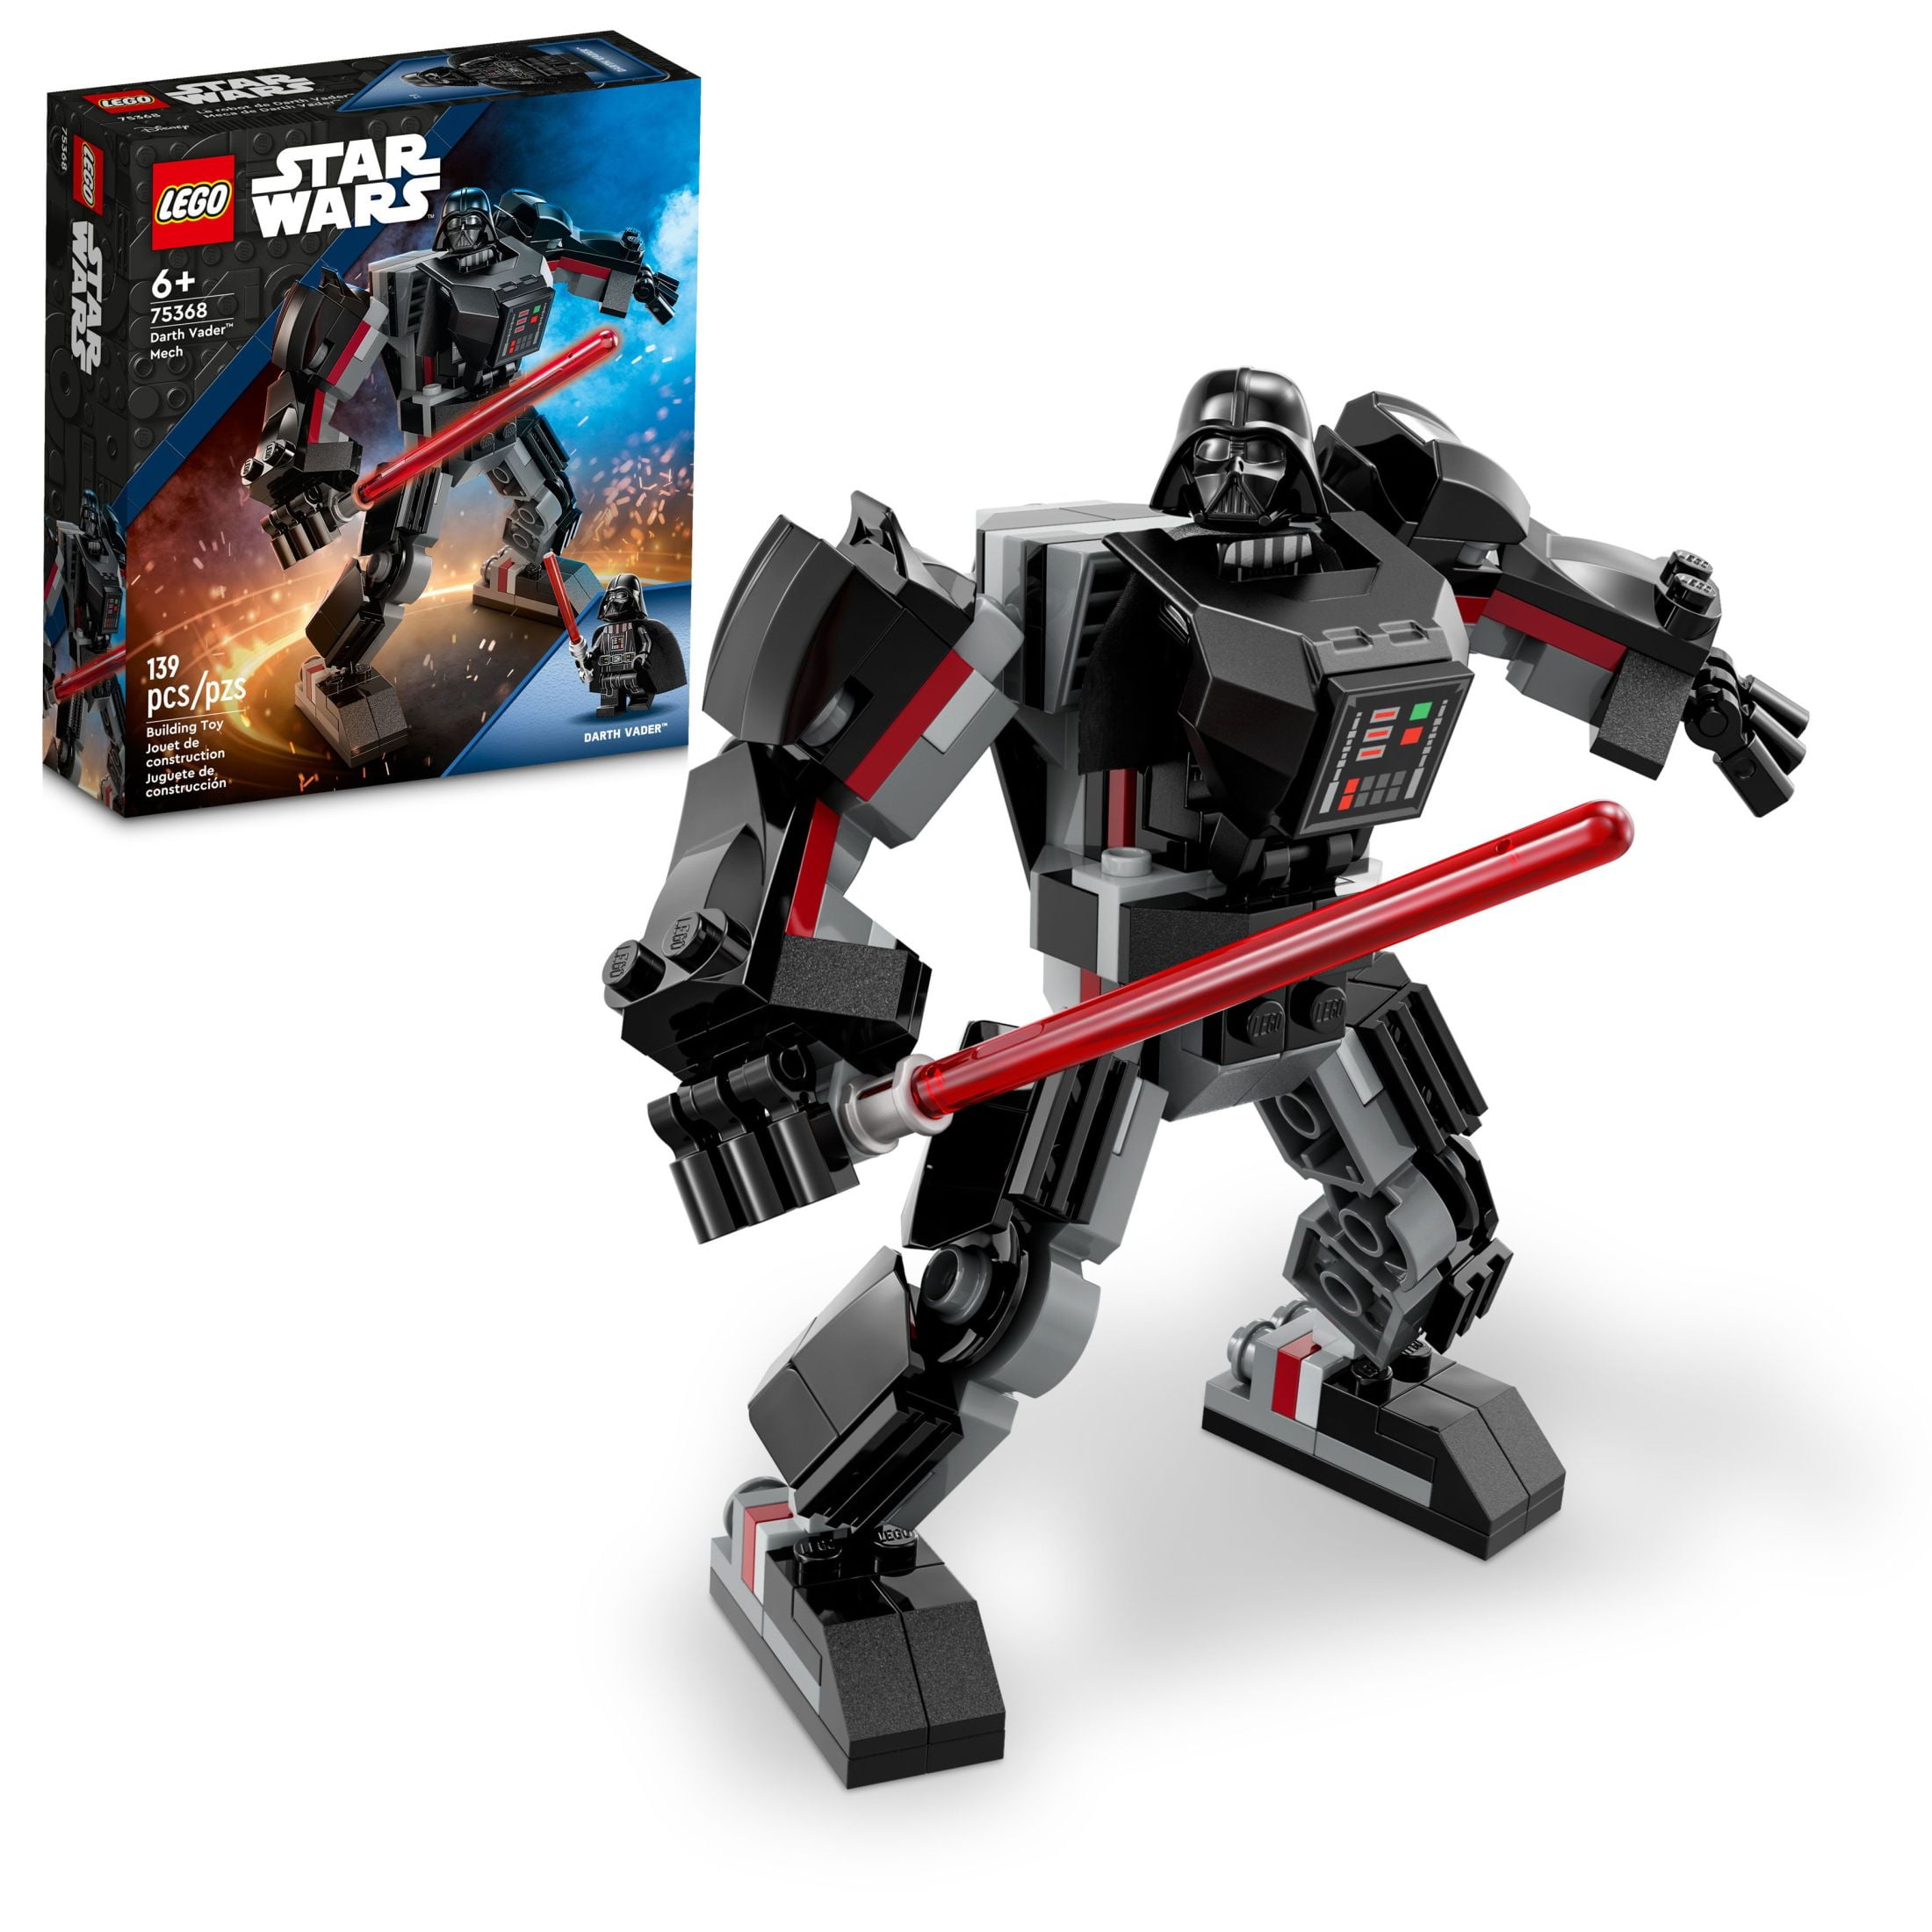 LEGO with Darth Vader